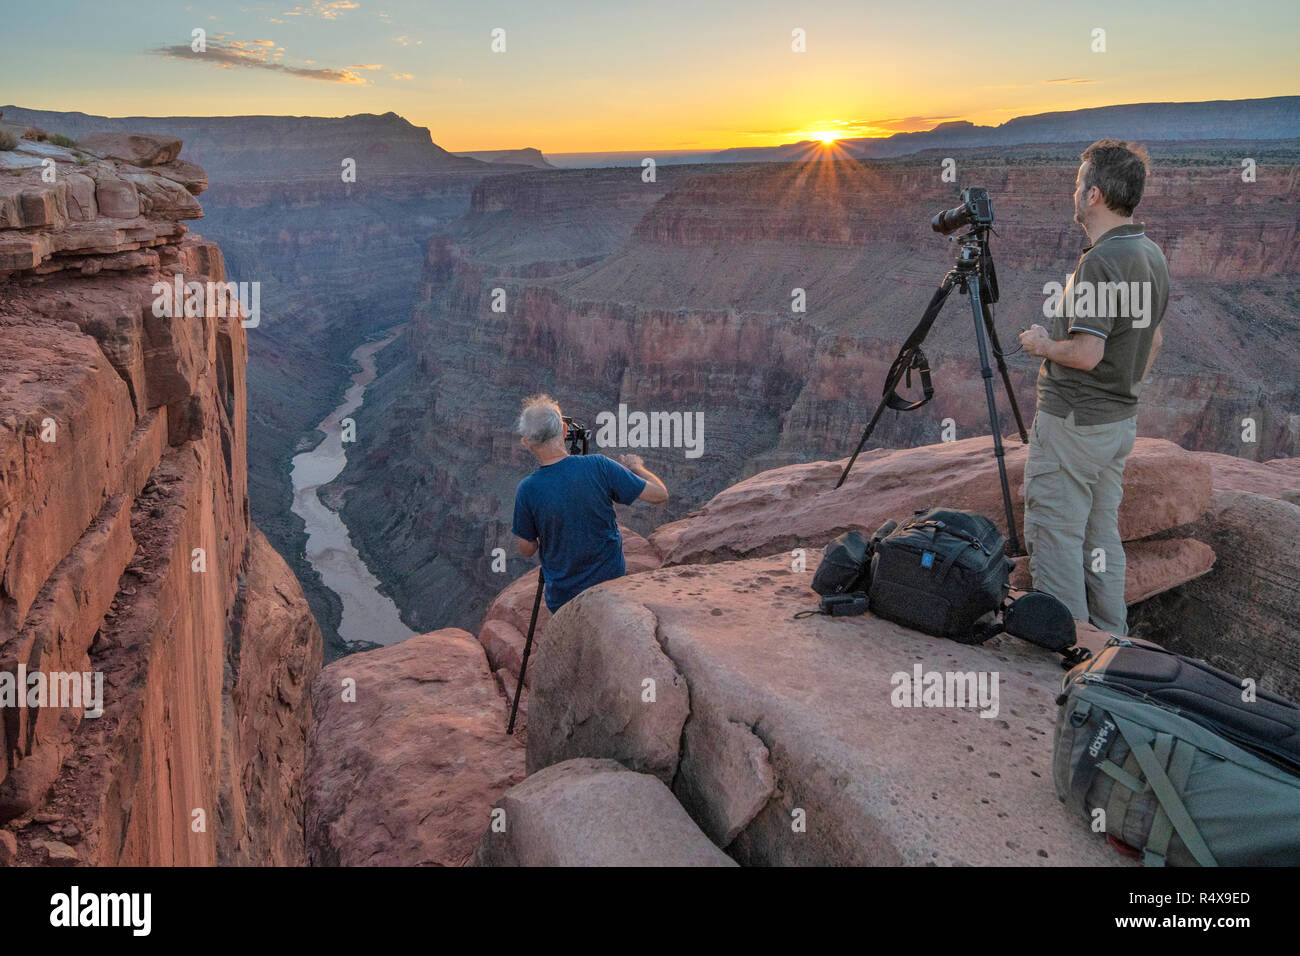 North America; American; USA; Desert Southwest; Colorado Plateau; Arizona; Grand Canyon National Park; North rim; Toroweap Point, Stock Photo